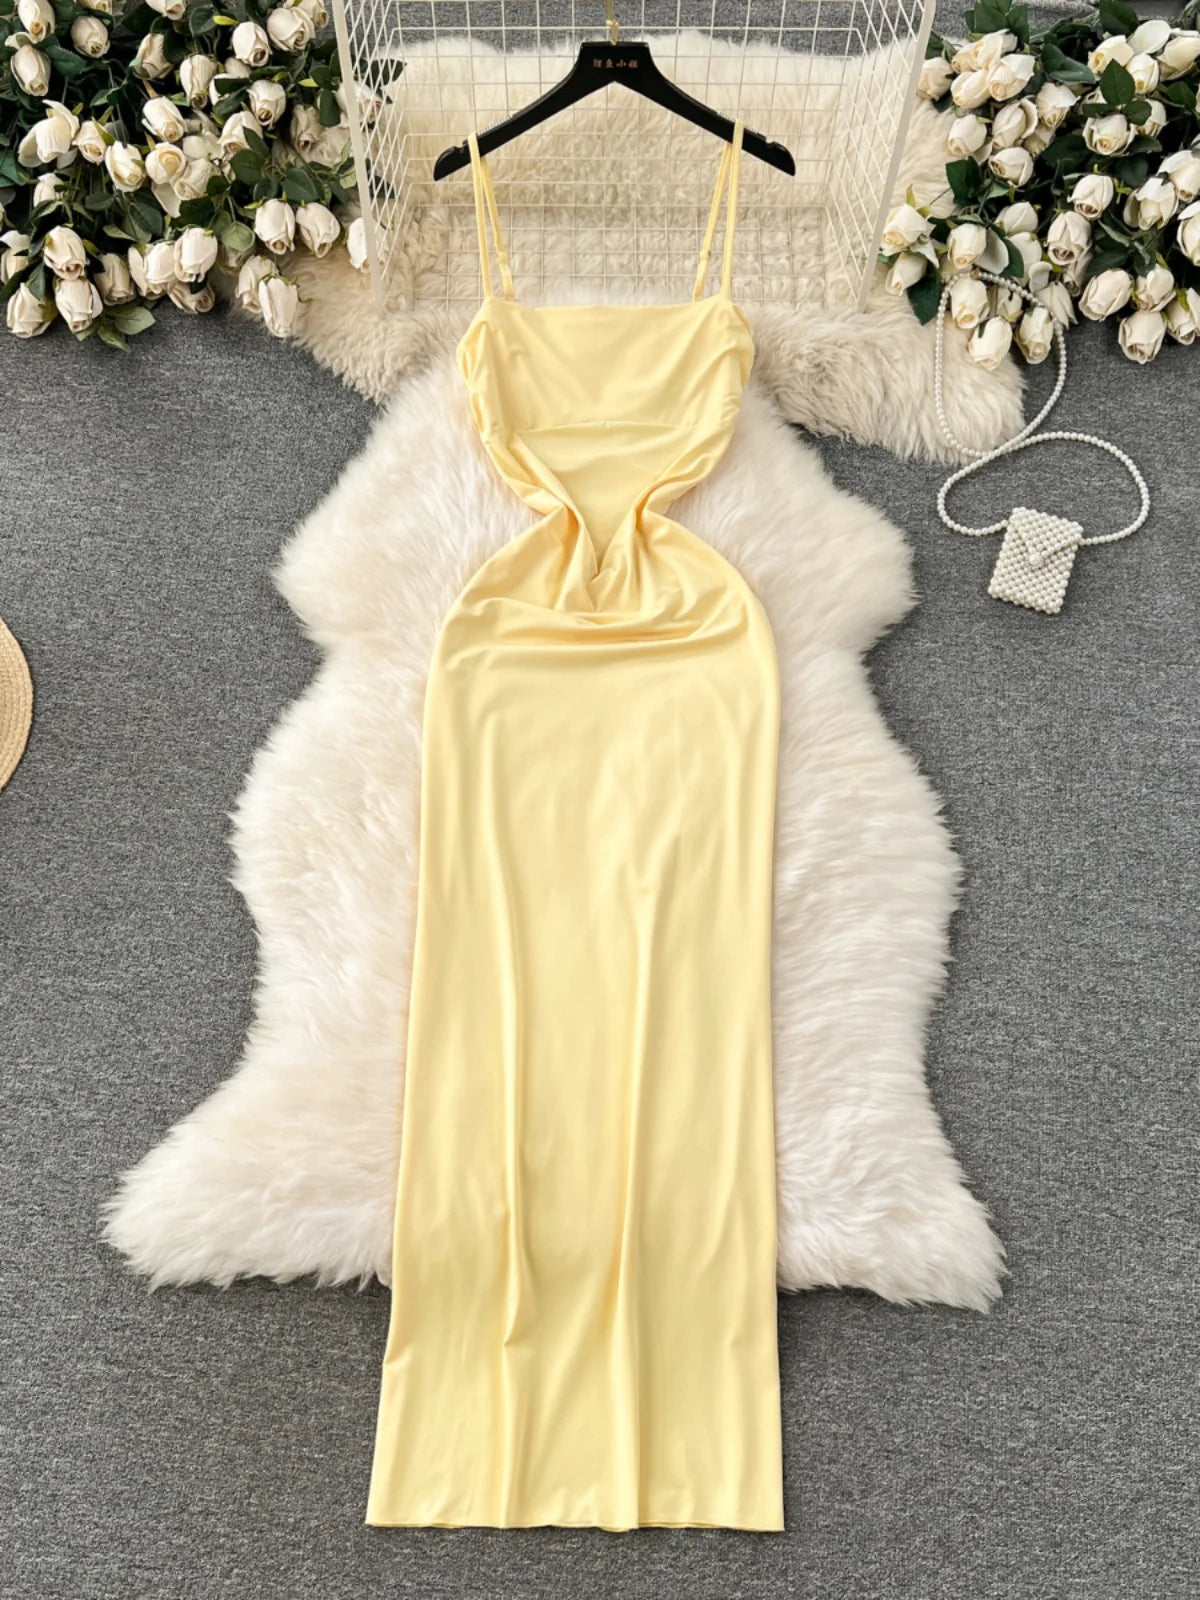 Elegant Yellow Satin Slip Dress For Evening Events